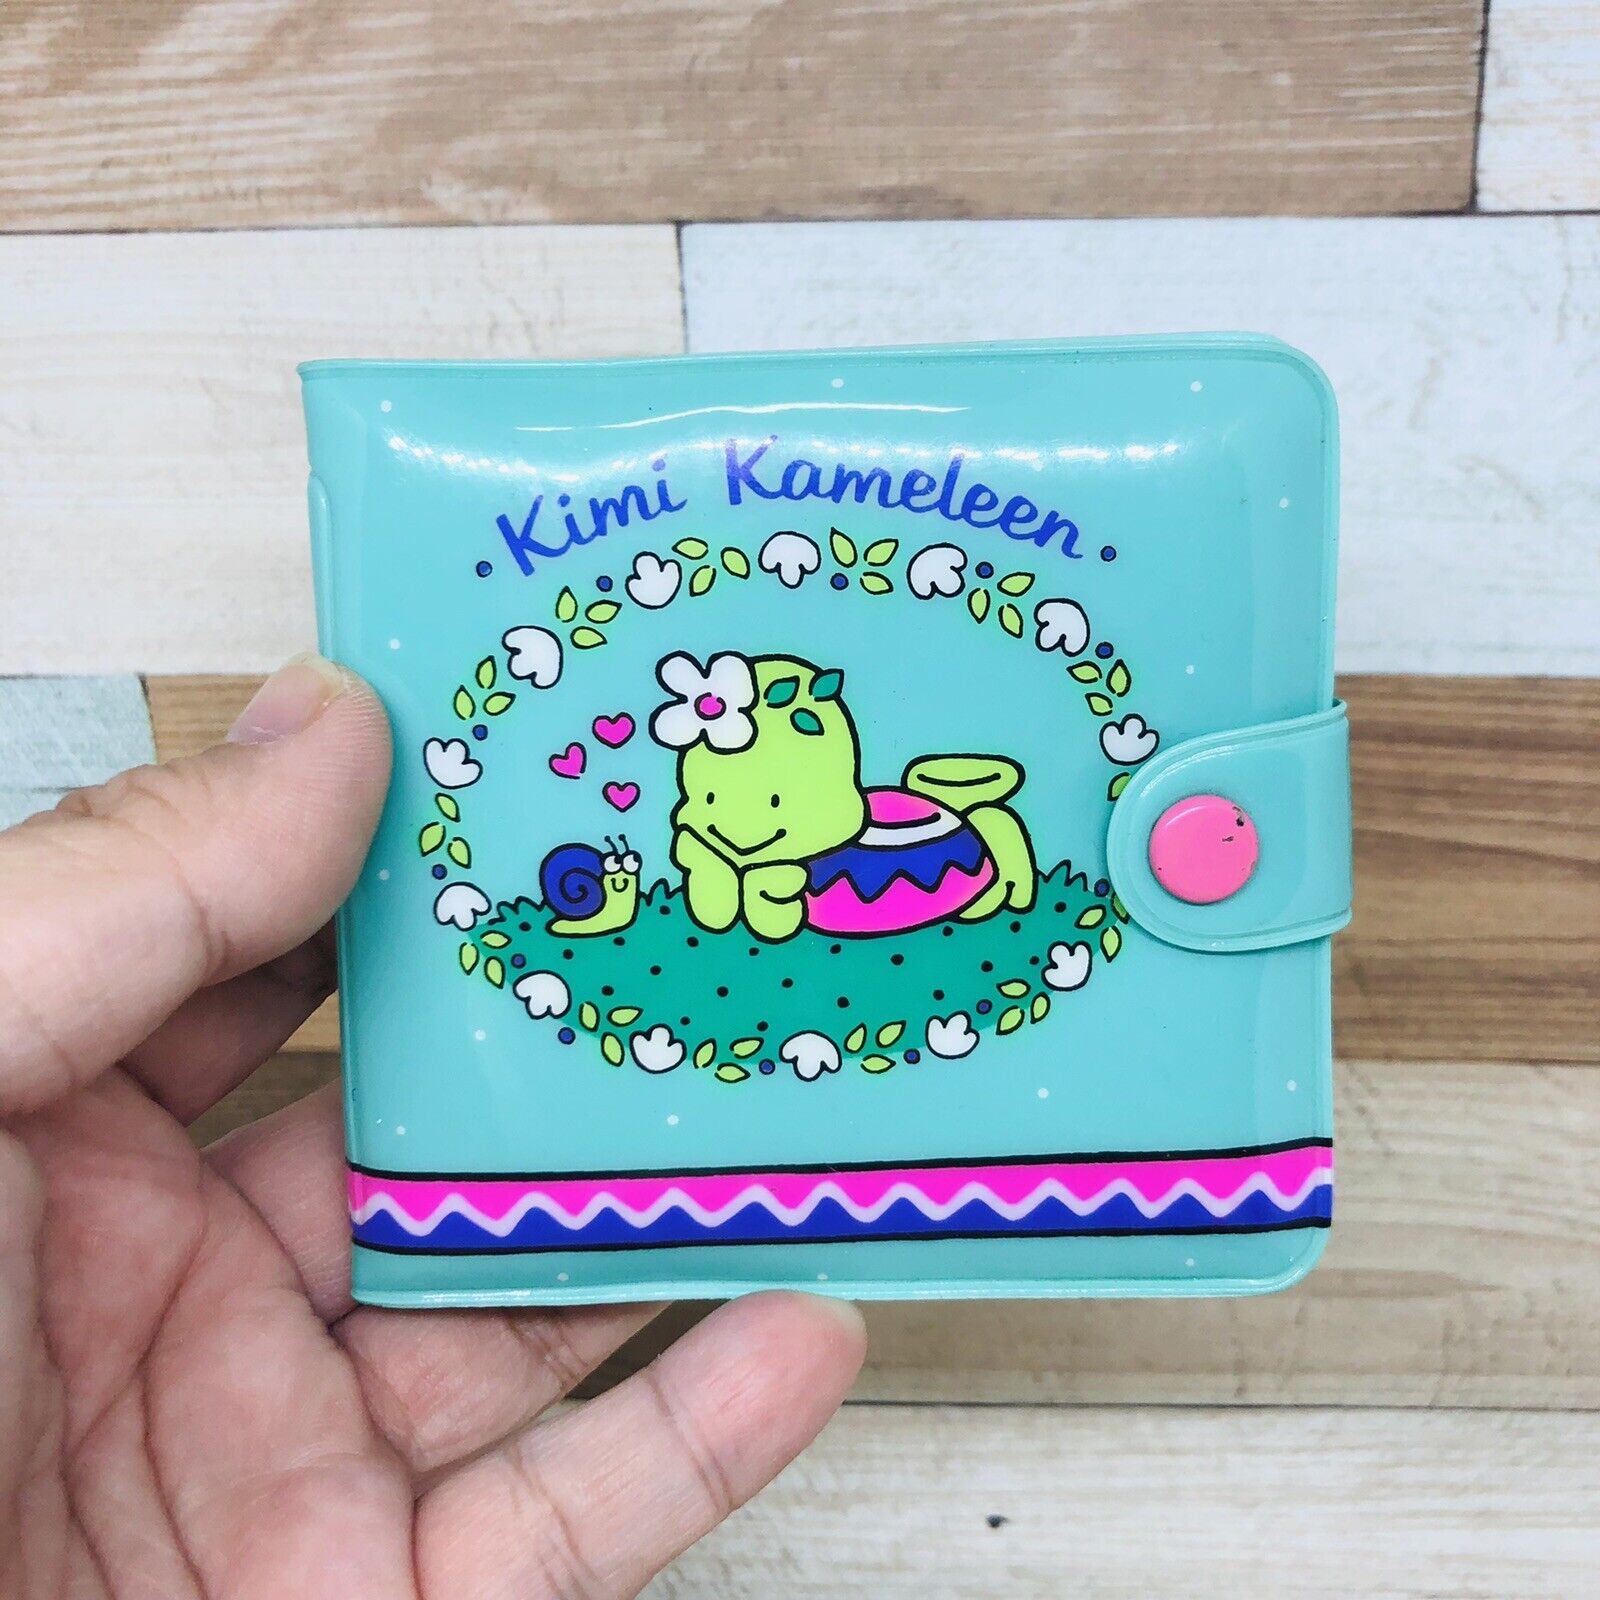 USED Vintage Sanrio Kimi Kameleen Wallet RARE HTF - Has Flaws - Read Description